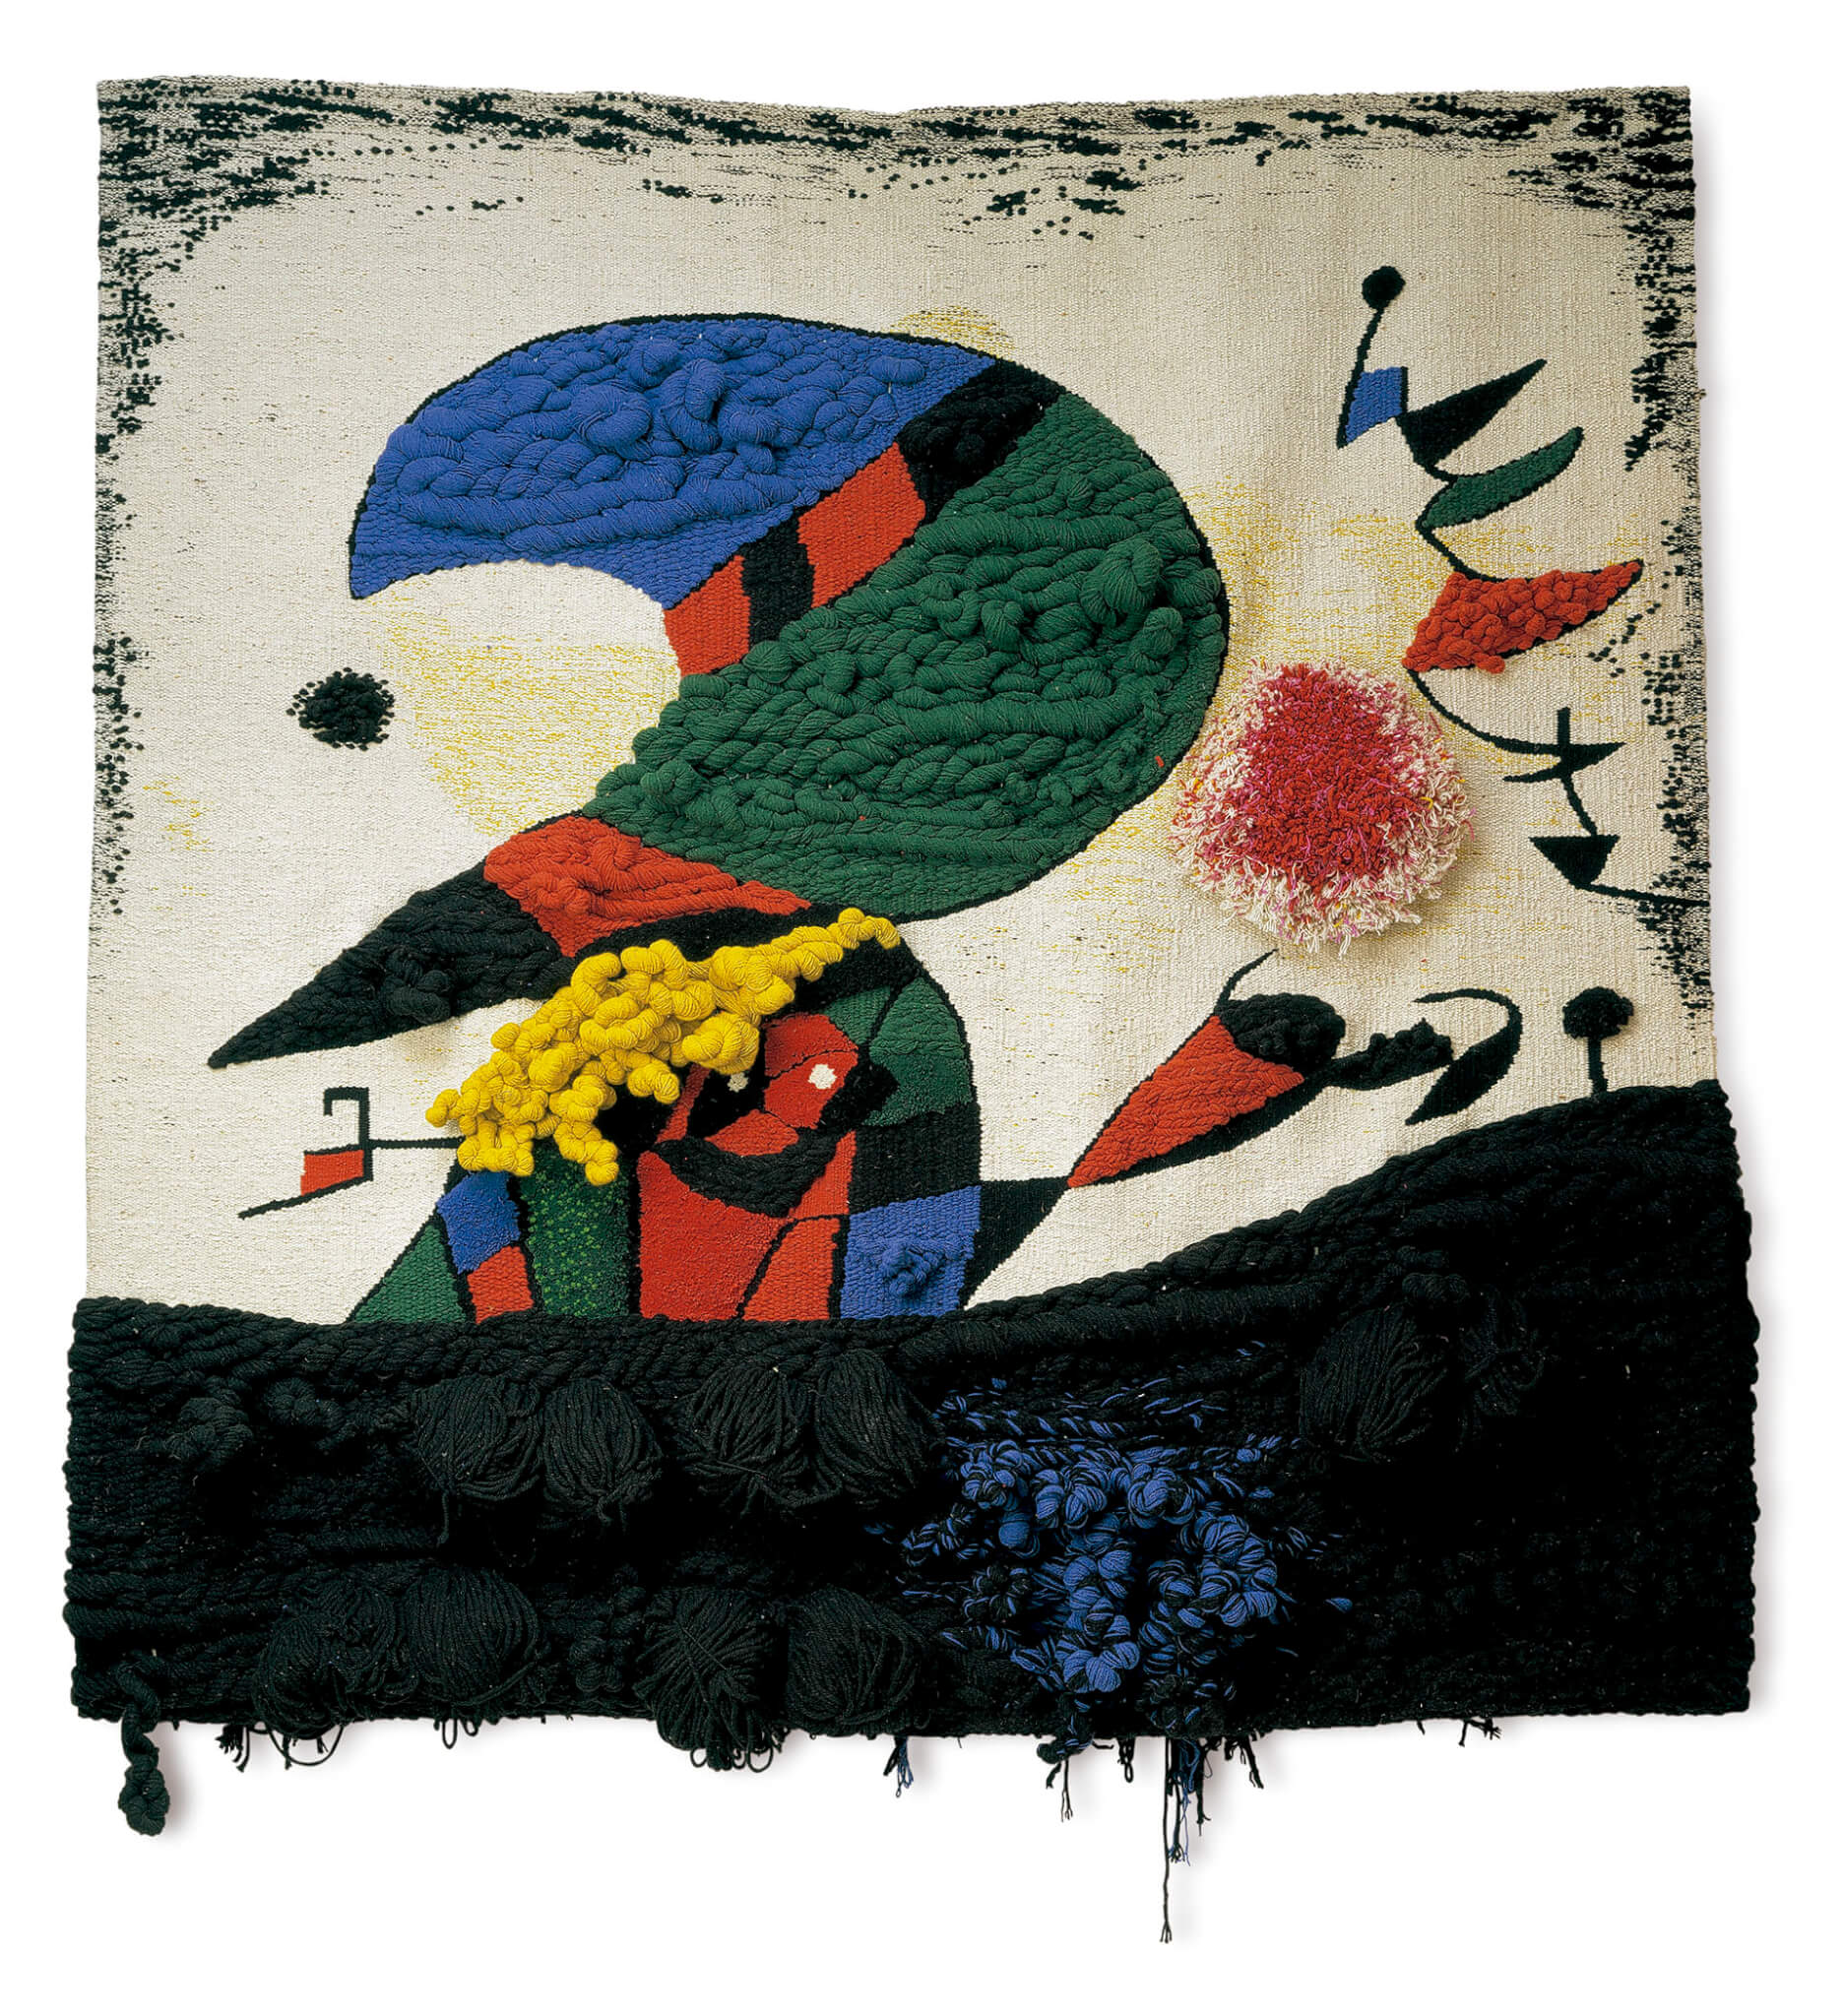 Delclaux-Miró